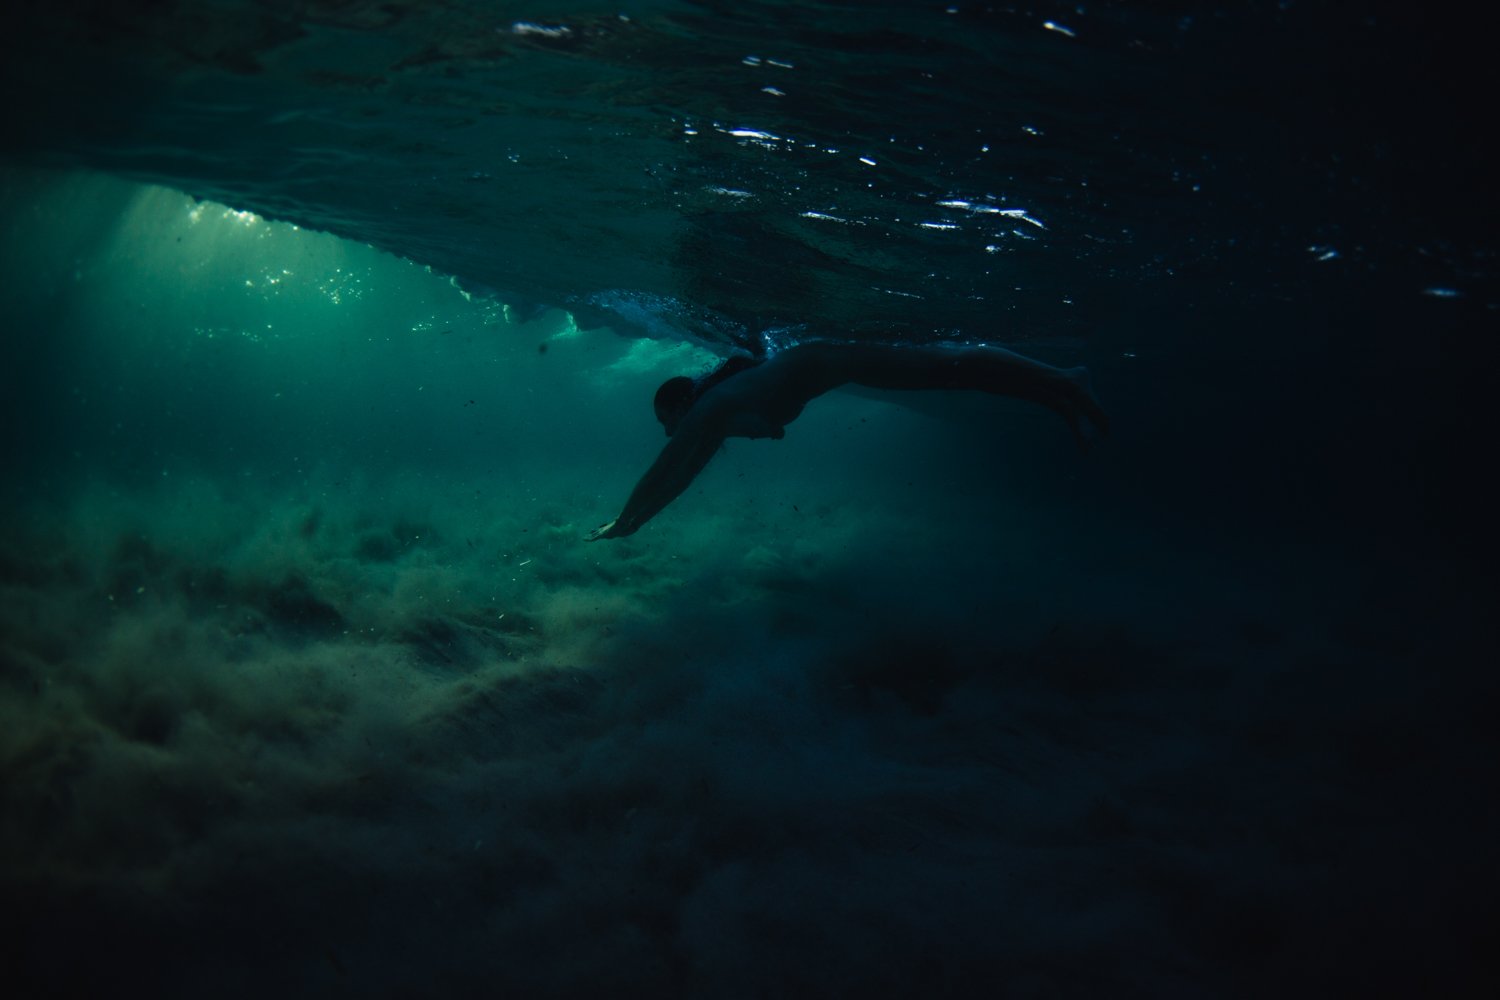 underwater corse corsica sea mediterranean island france french photographer photographe ajaccio Krista Espino Capo di feno wave nude nue femme woman fine art photography-54.jpg